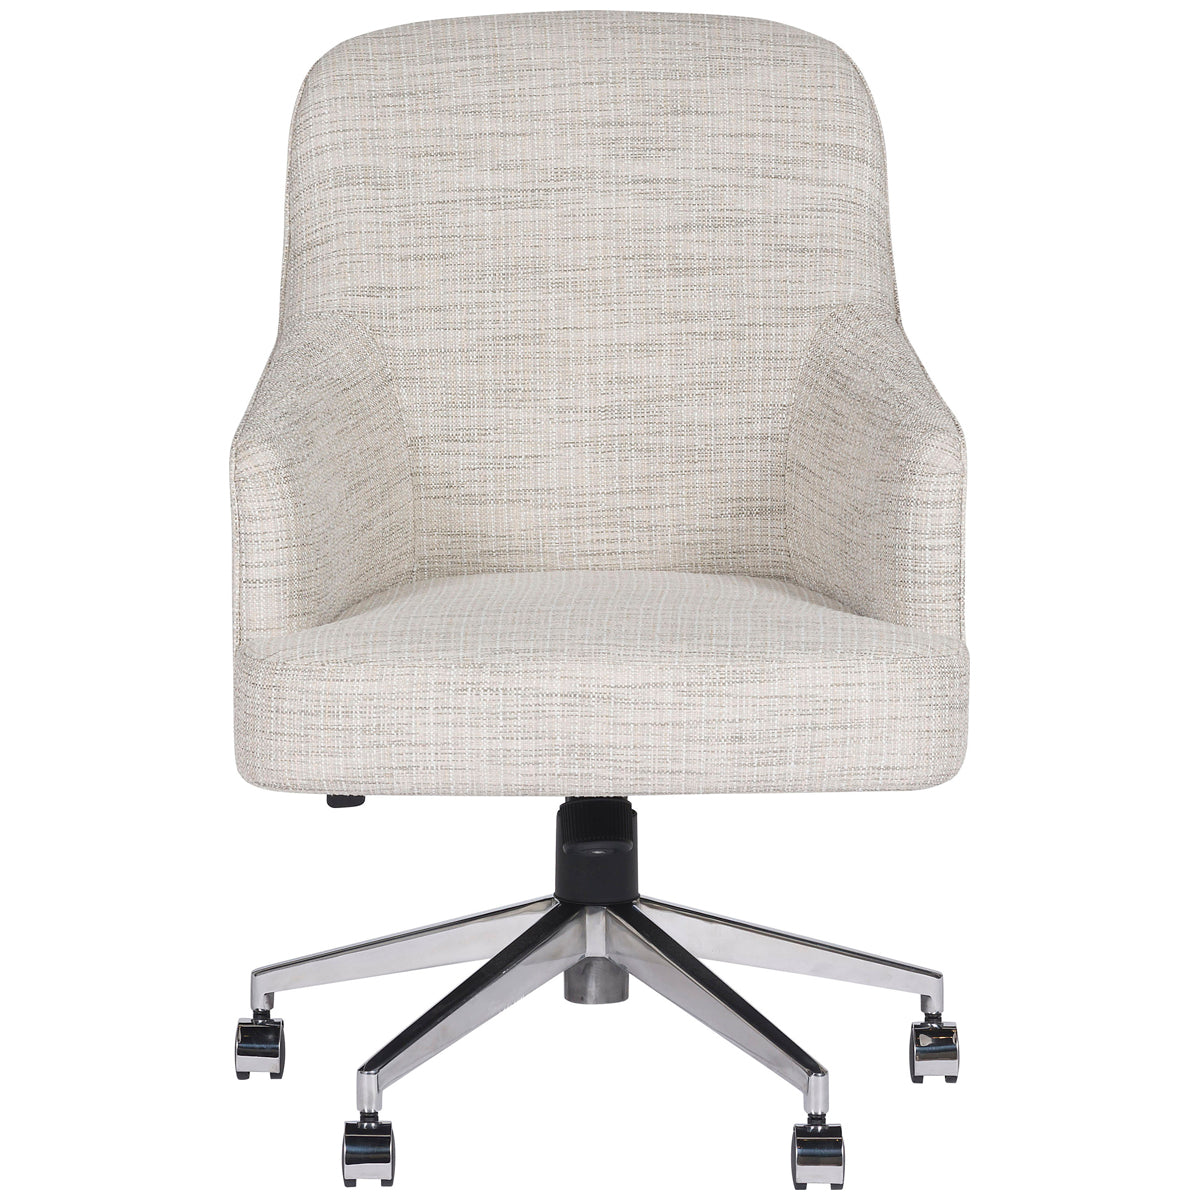 Vanguard Furniture Tompkins Desk Chair